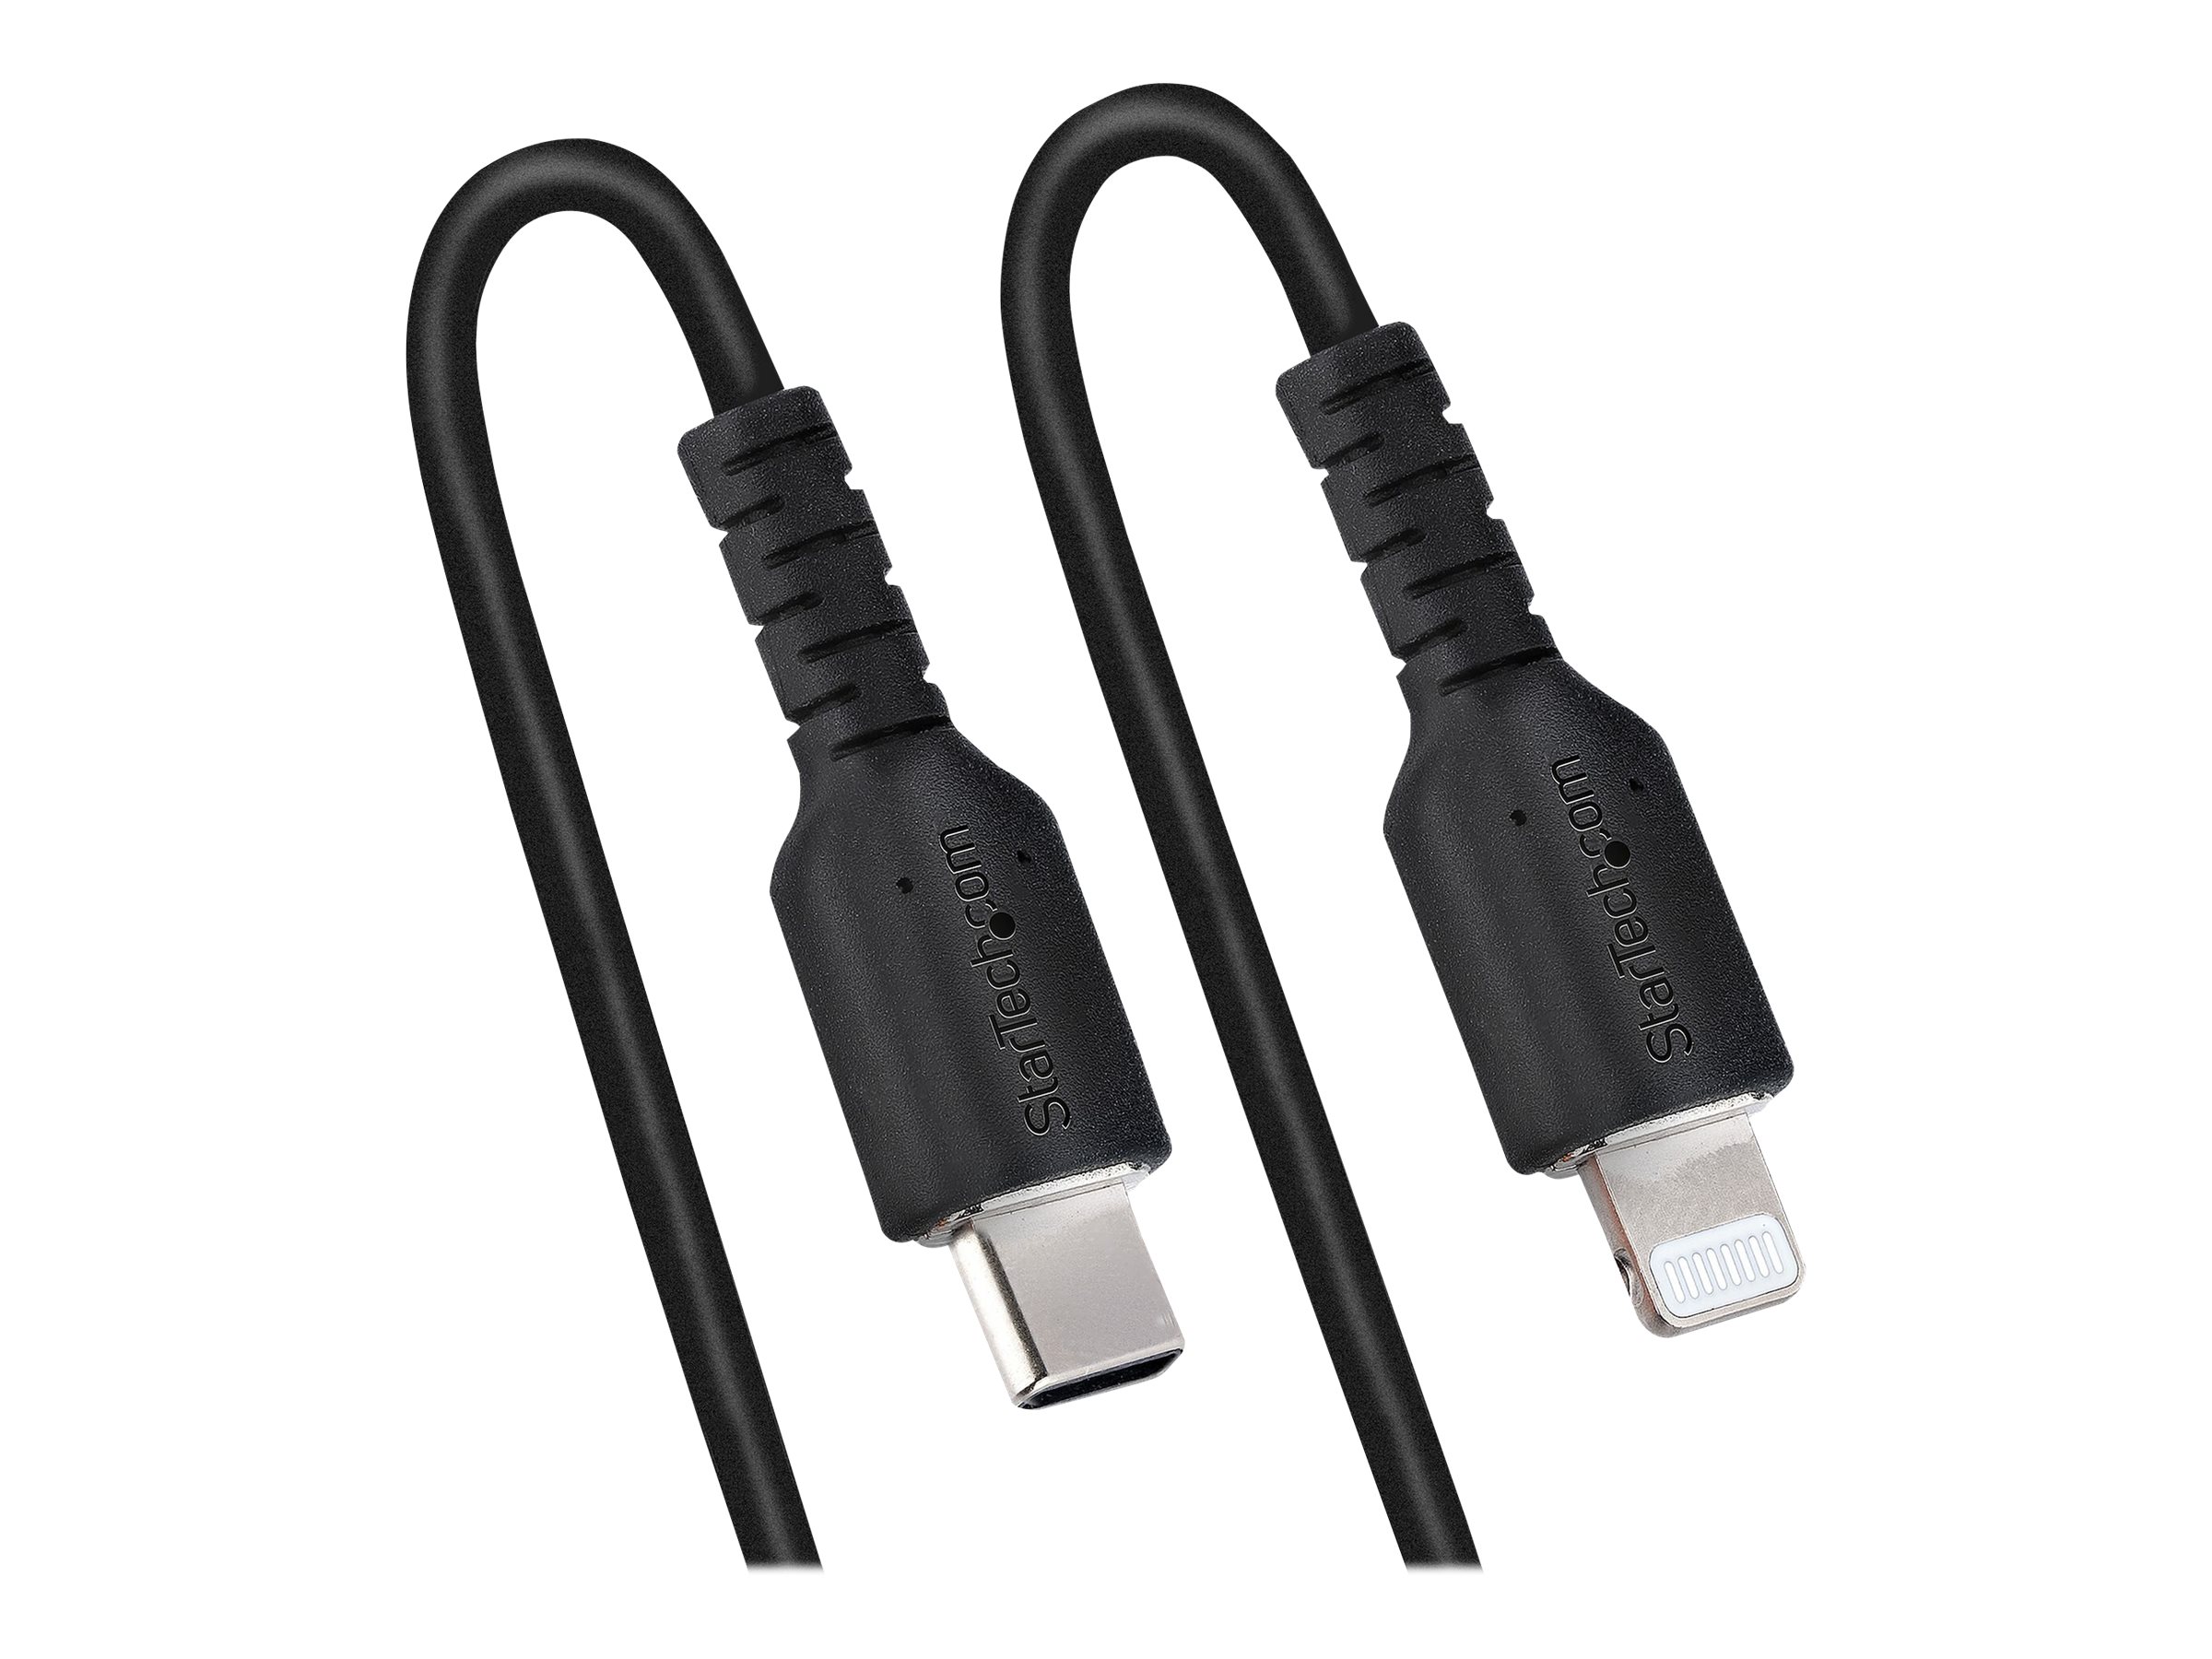 Kabel - Schwarz USB 2.0 auf USB C 1m - USB-C-Kabel